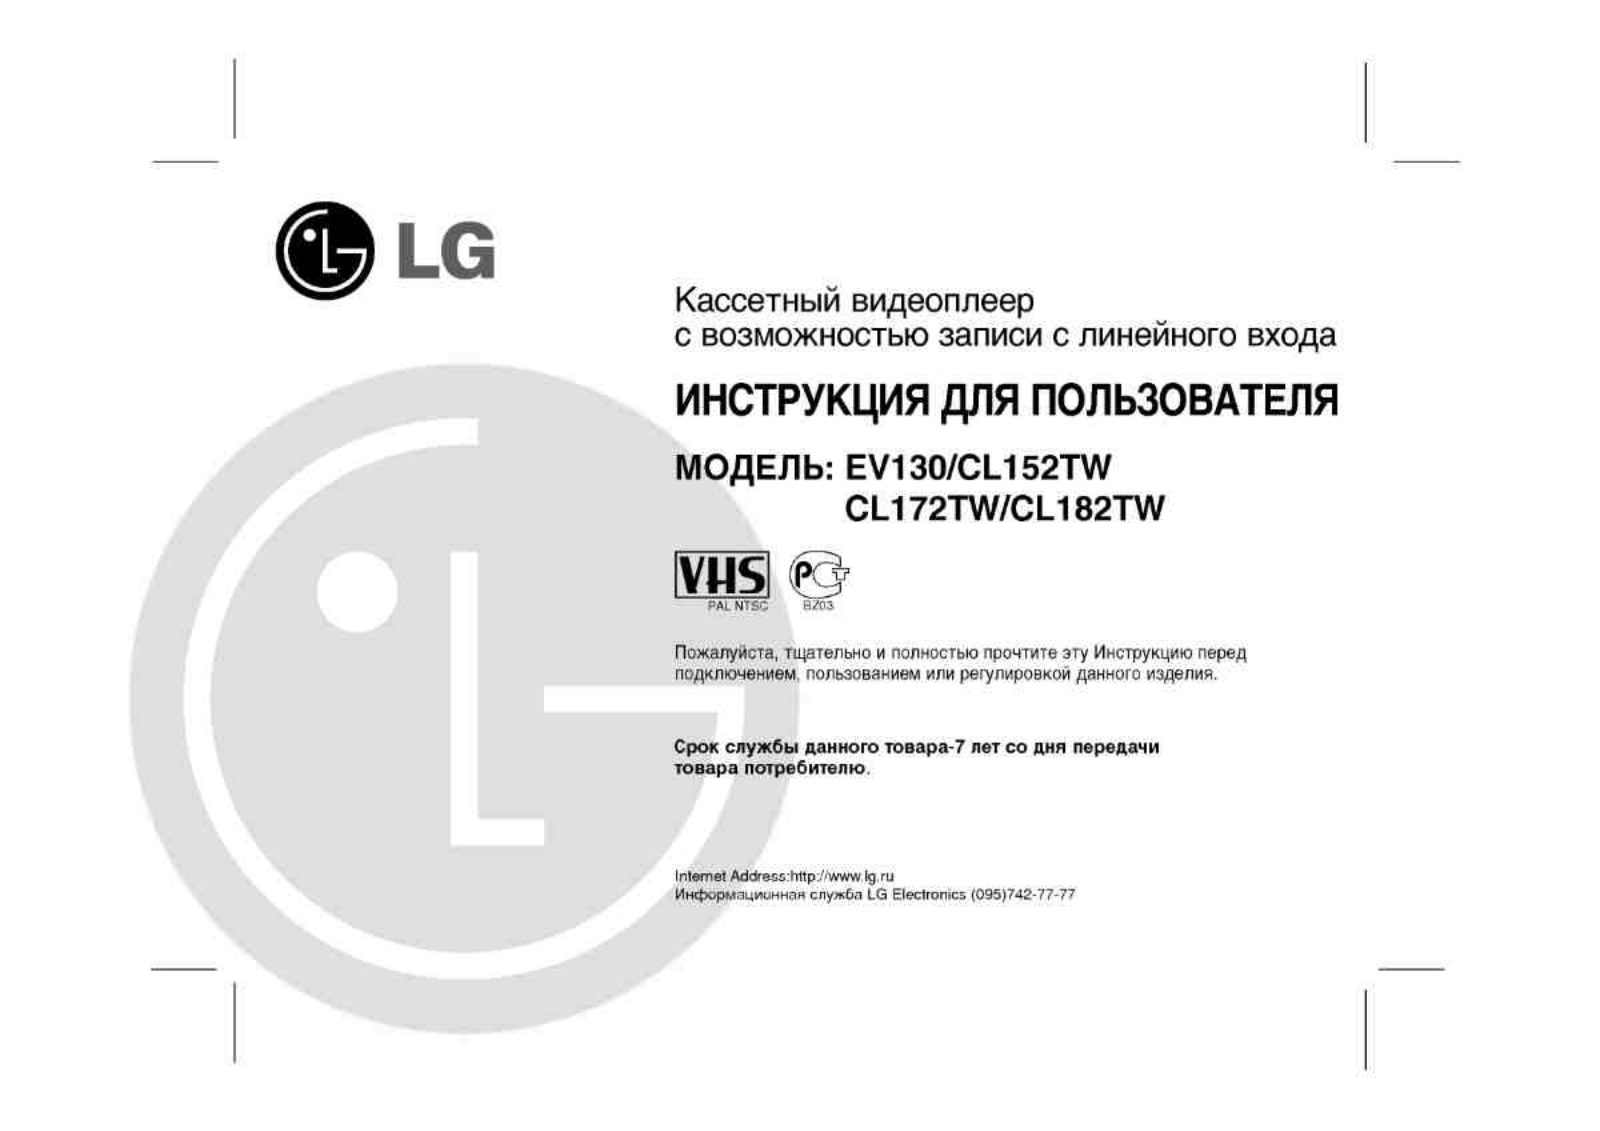 LG CL182TW User Manual